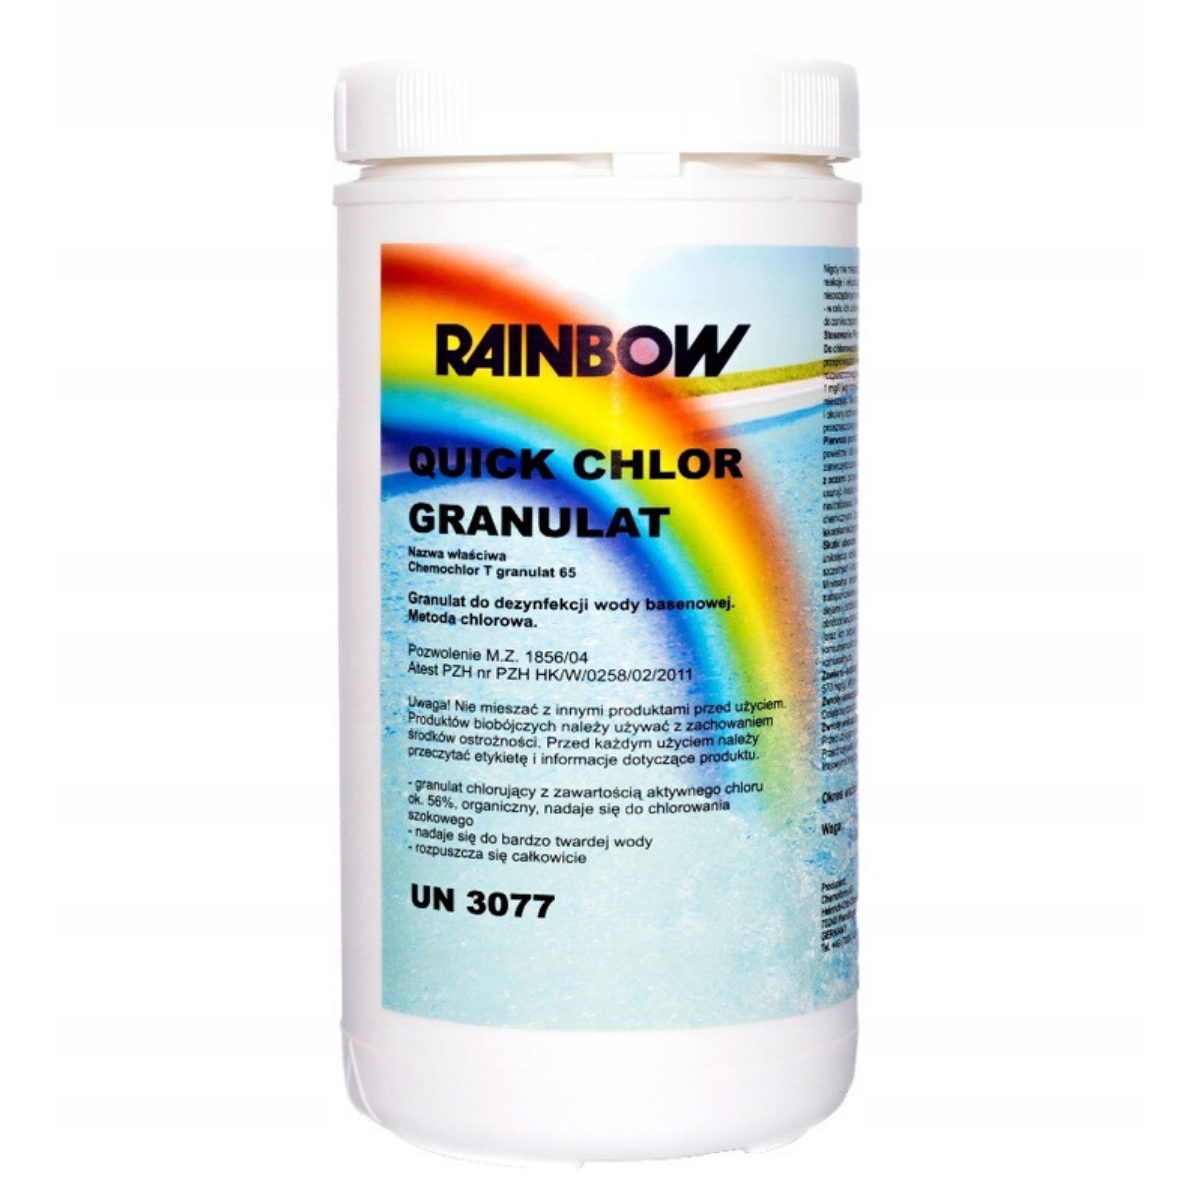 RAINBOW Quick Chlor Granulat 1KG - dezynfekcja szokowa - basensklep